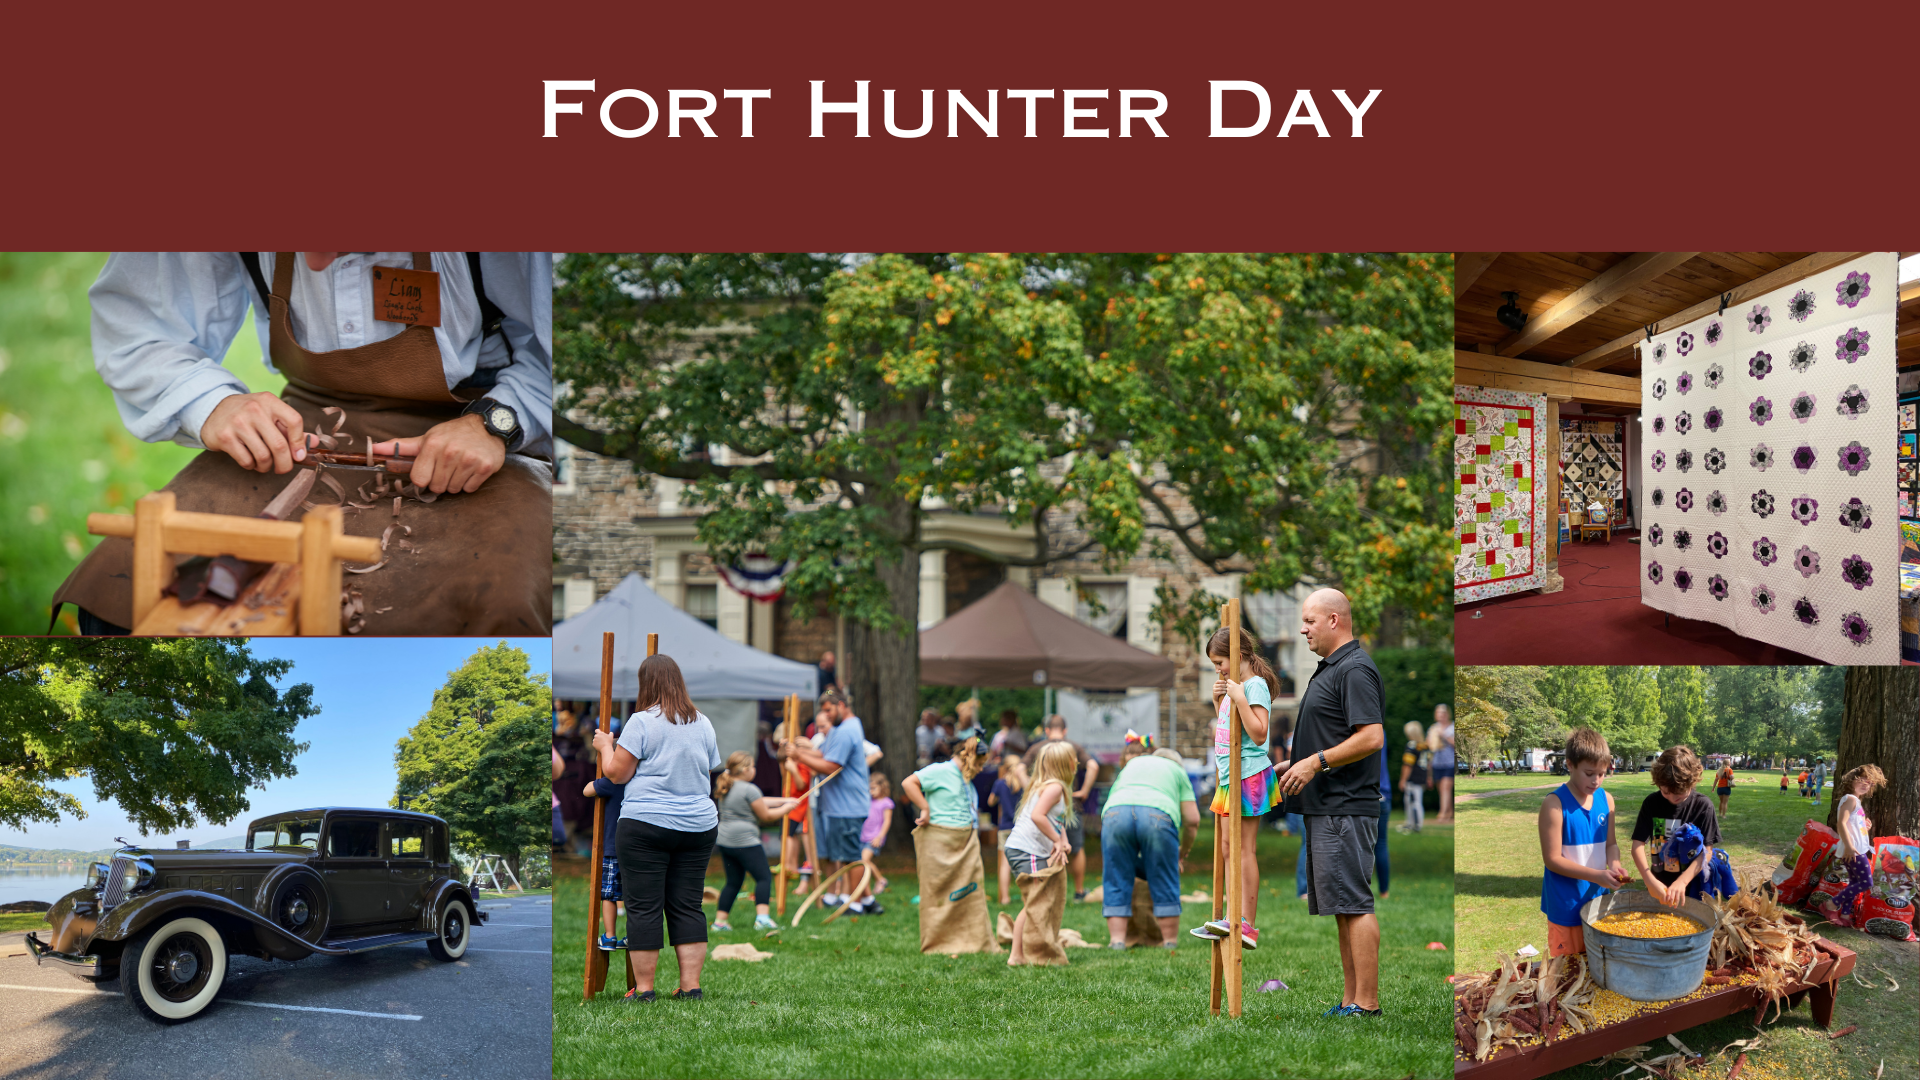 Images for Fort Hunter Day - Antique Car, Man Widling, kids in potato sacks, kids shucking corn, quilts